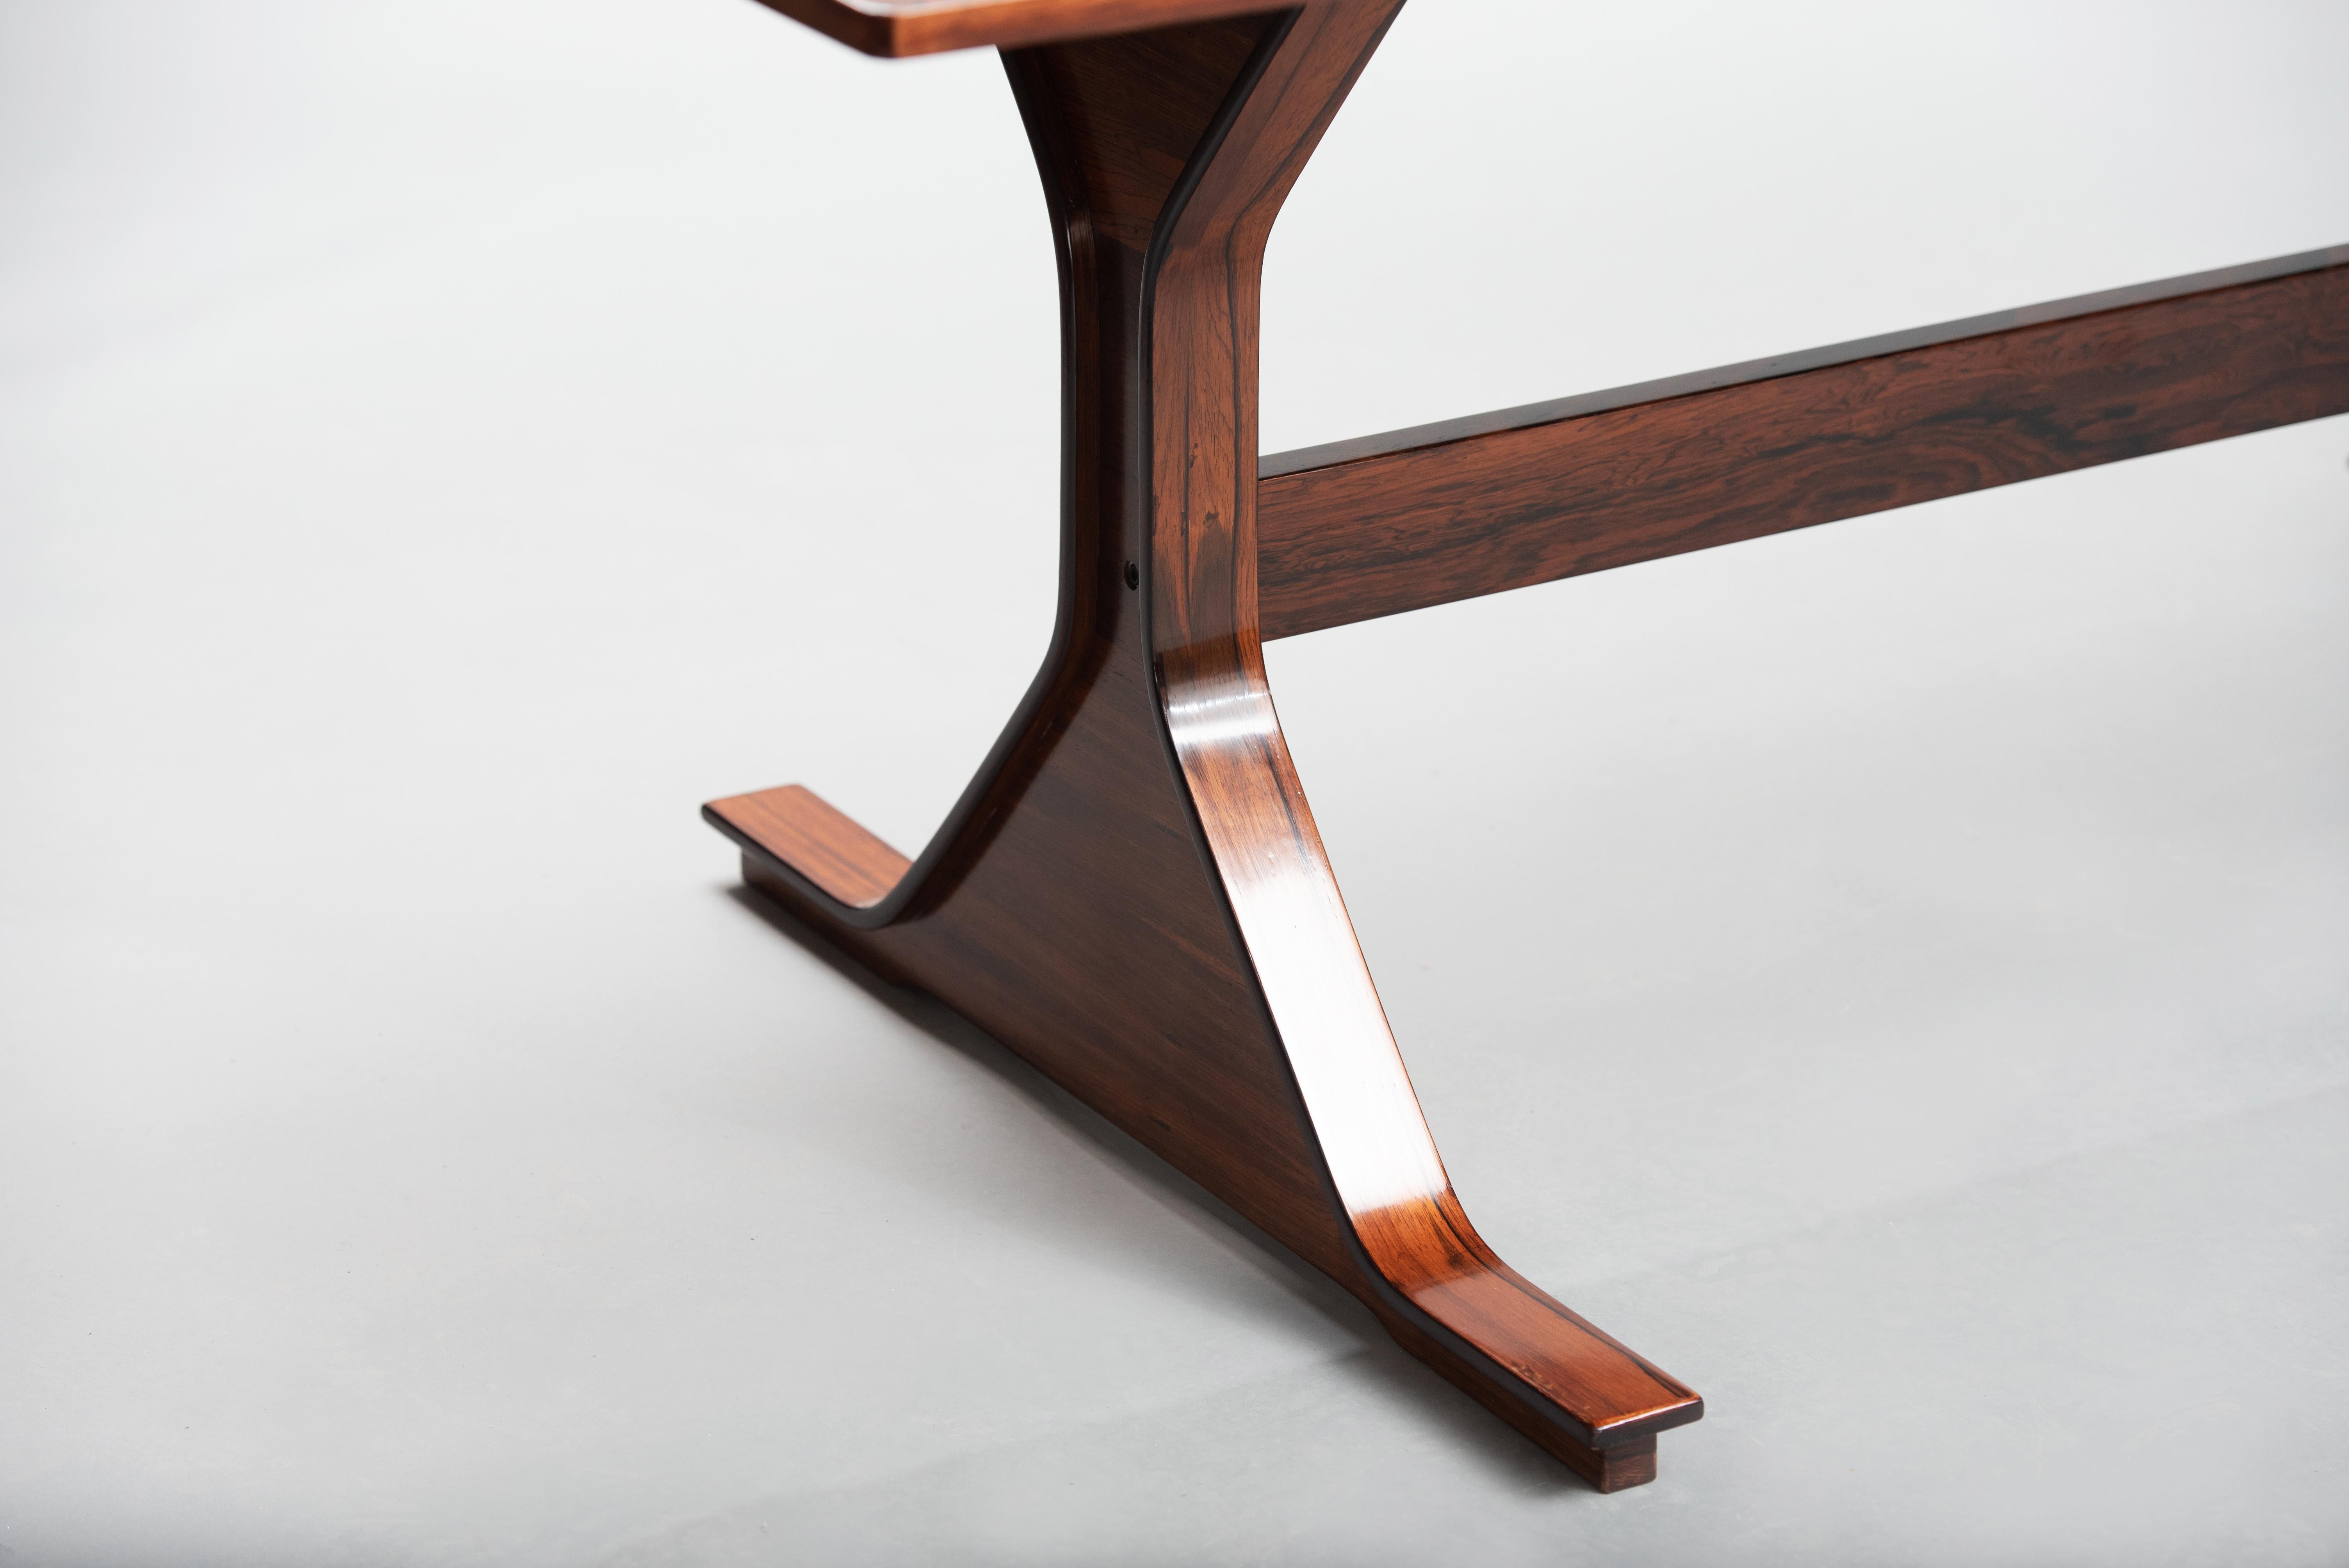 Varnished Gianfranco Frattini Rosewood Dining Table for Bernini Model 522